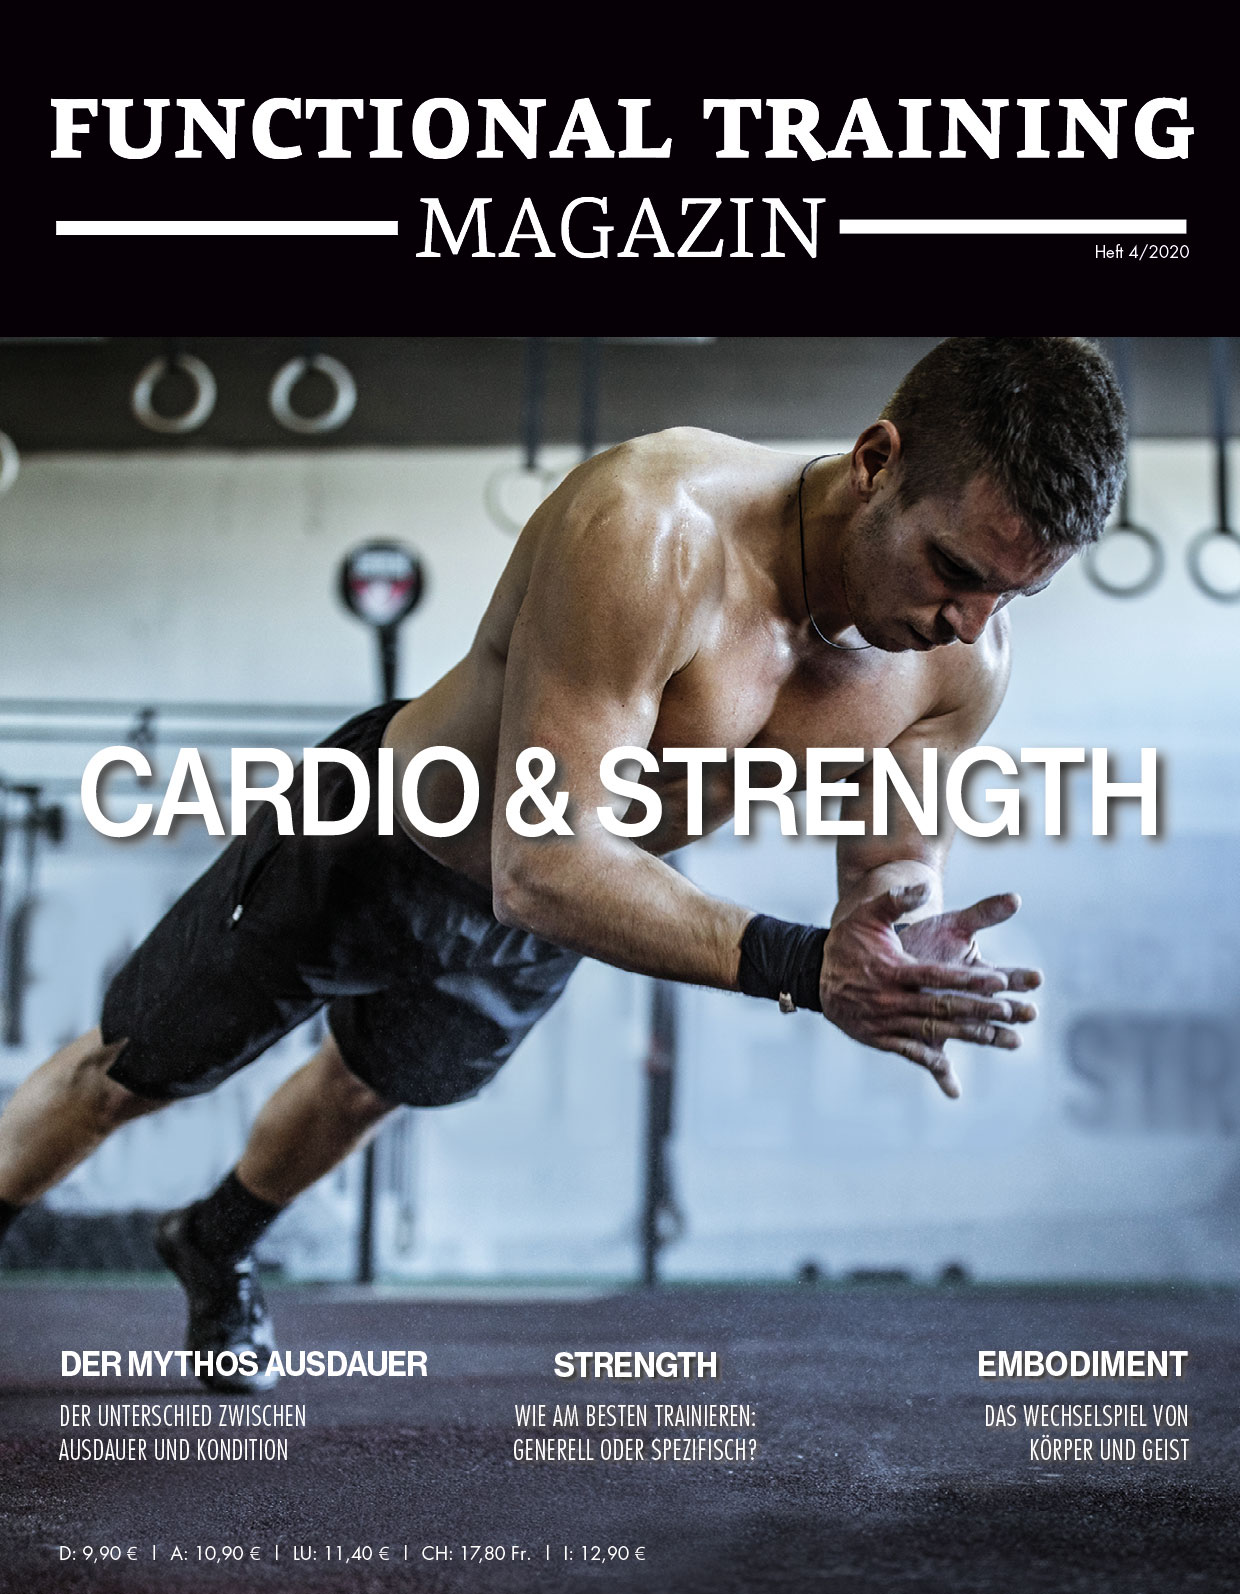 ftm-4-2020-cardio-strength-functional-training-cover